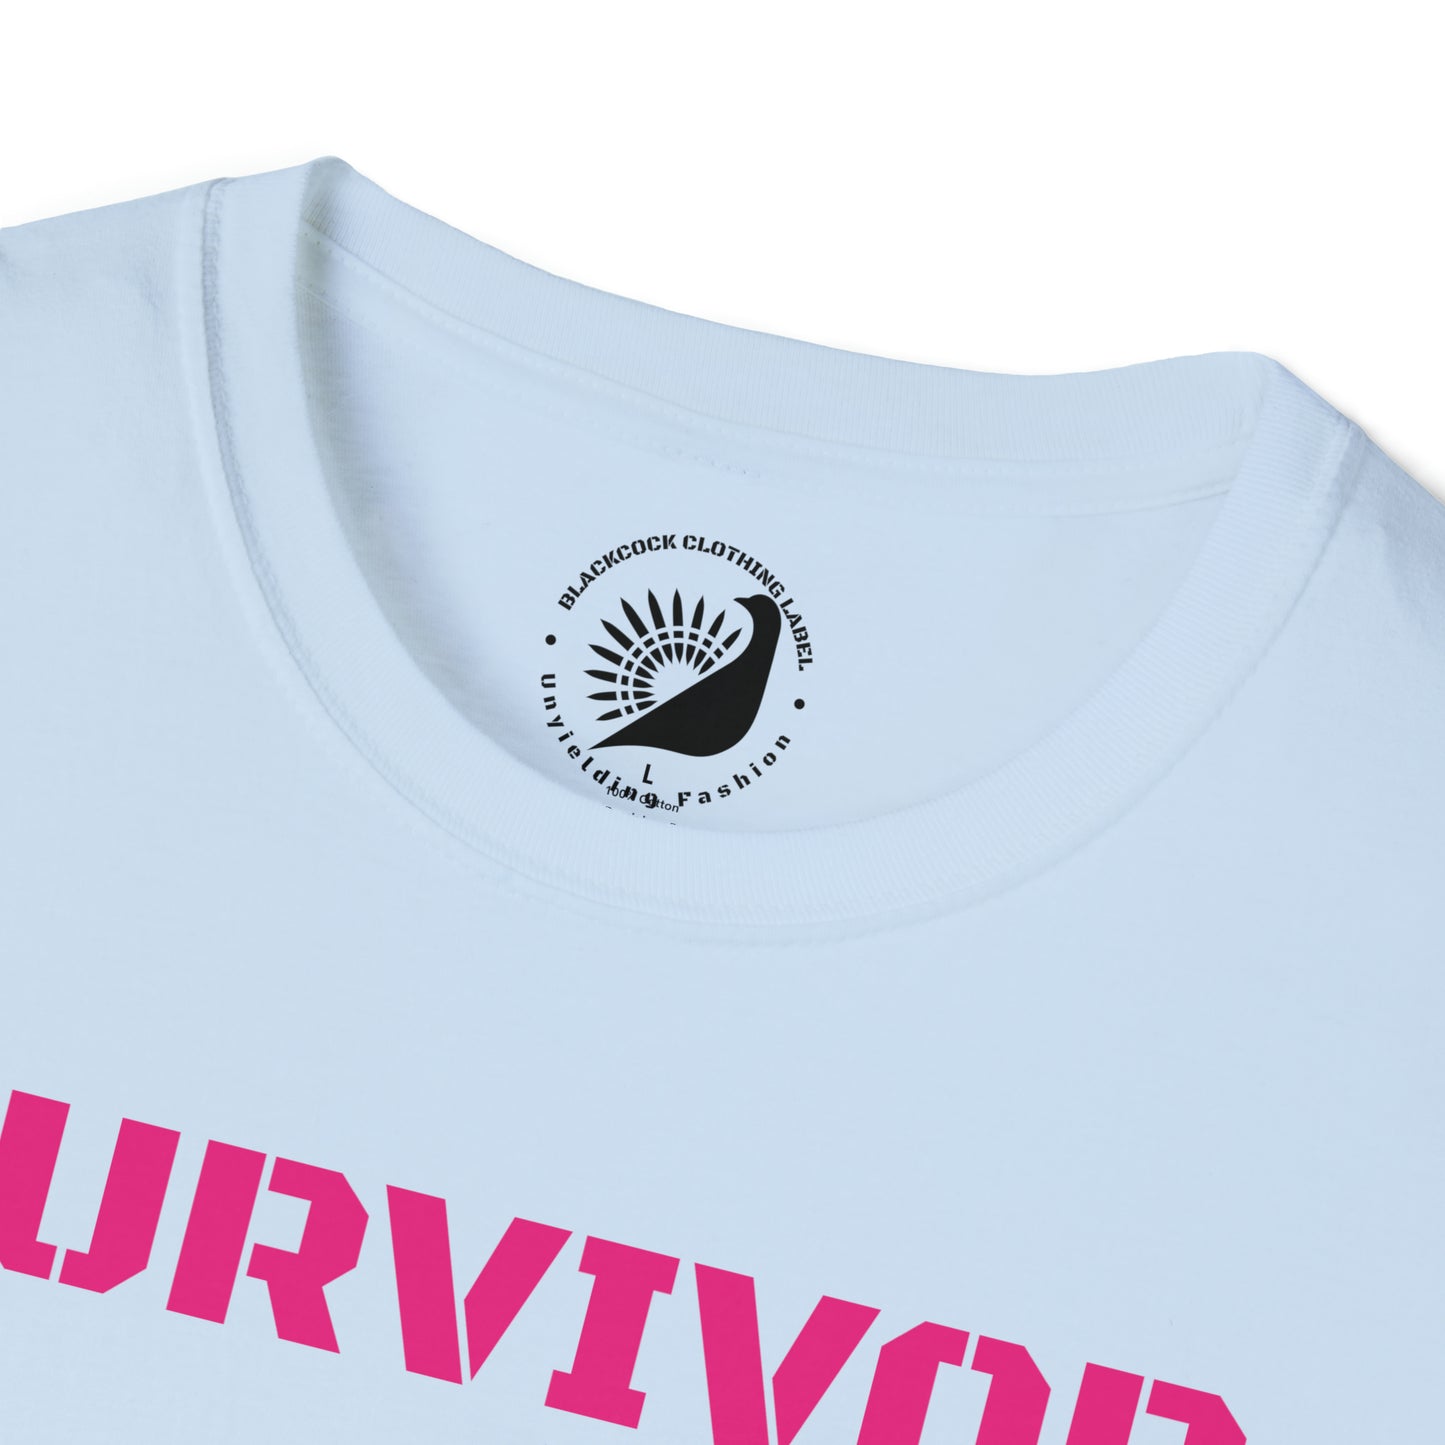 Survivor Softstyle T-Shirt